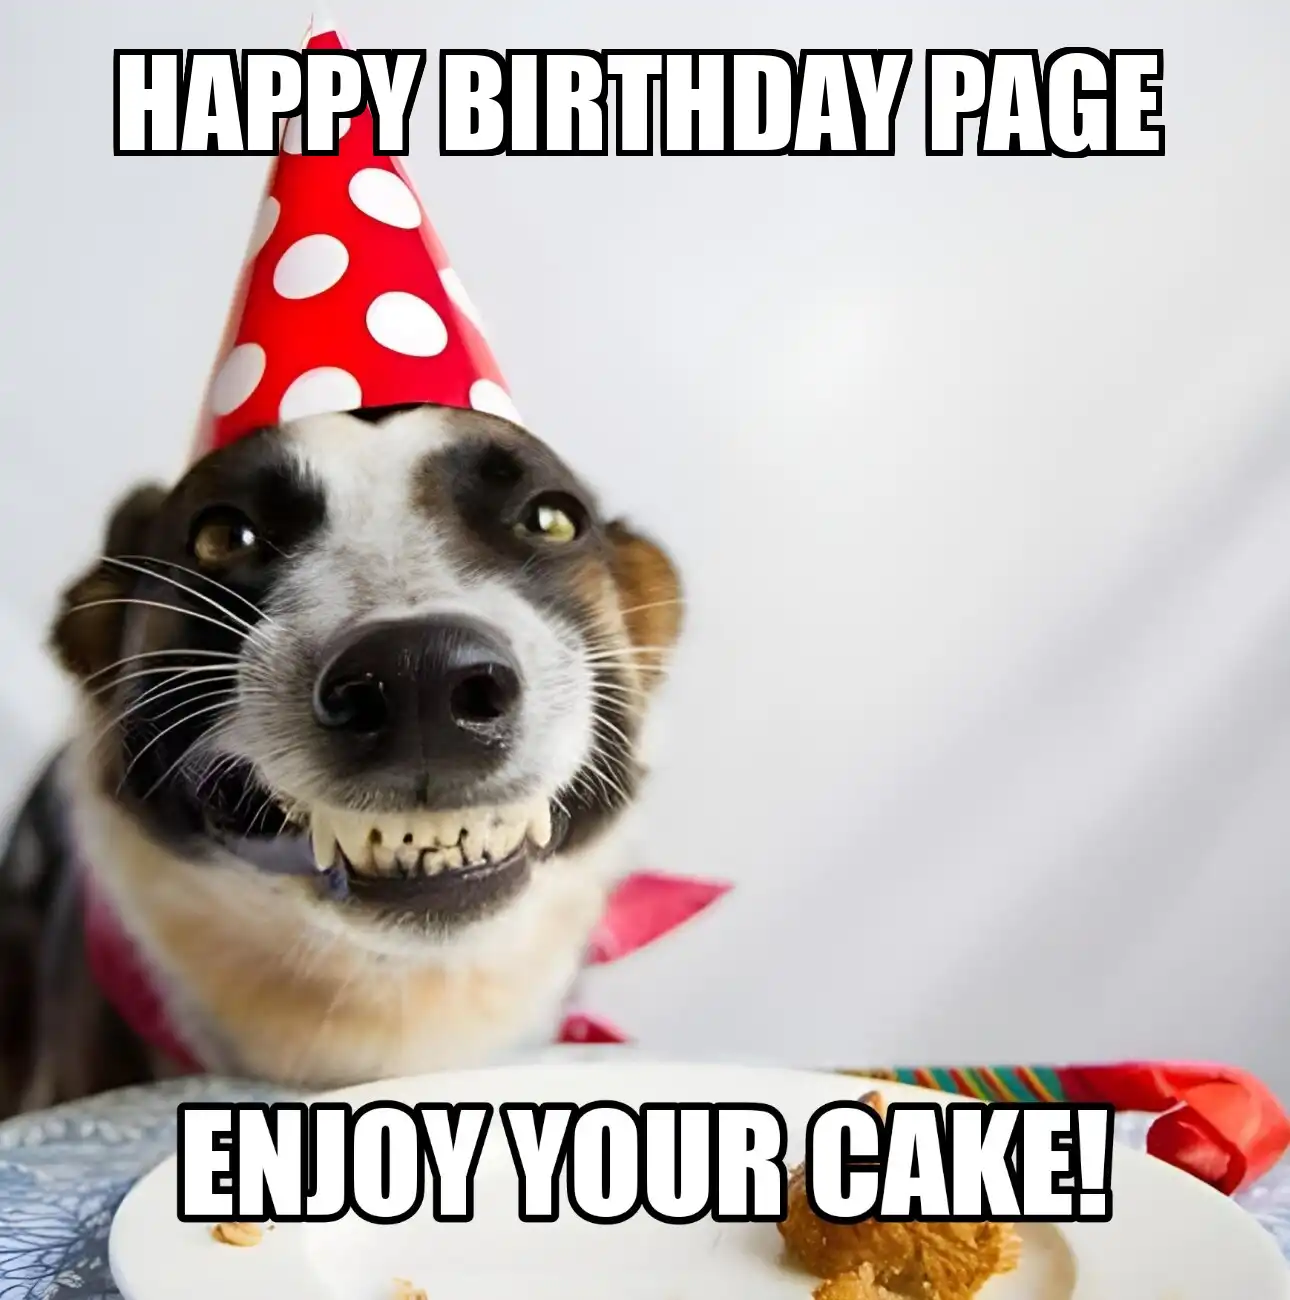 Happy Birthday Page Enjoy Your Cake Dog Meme